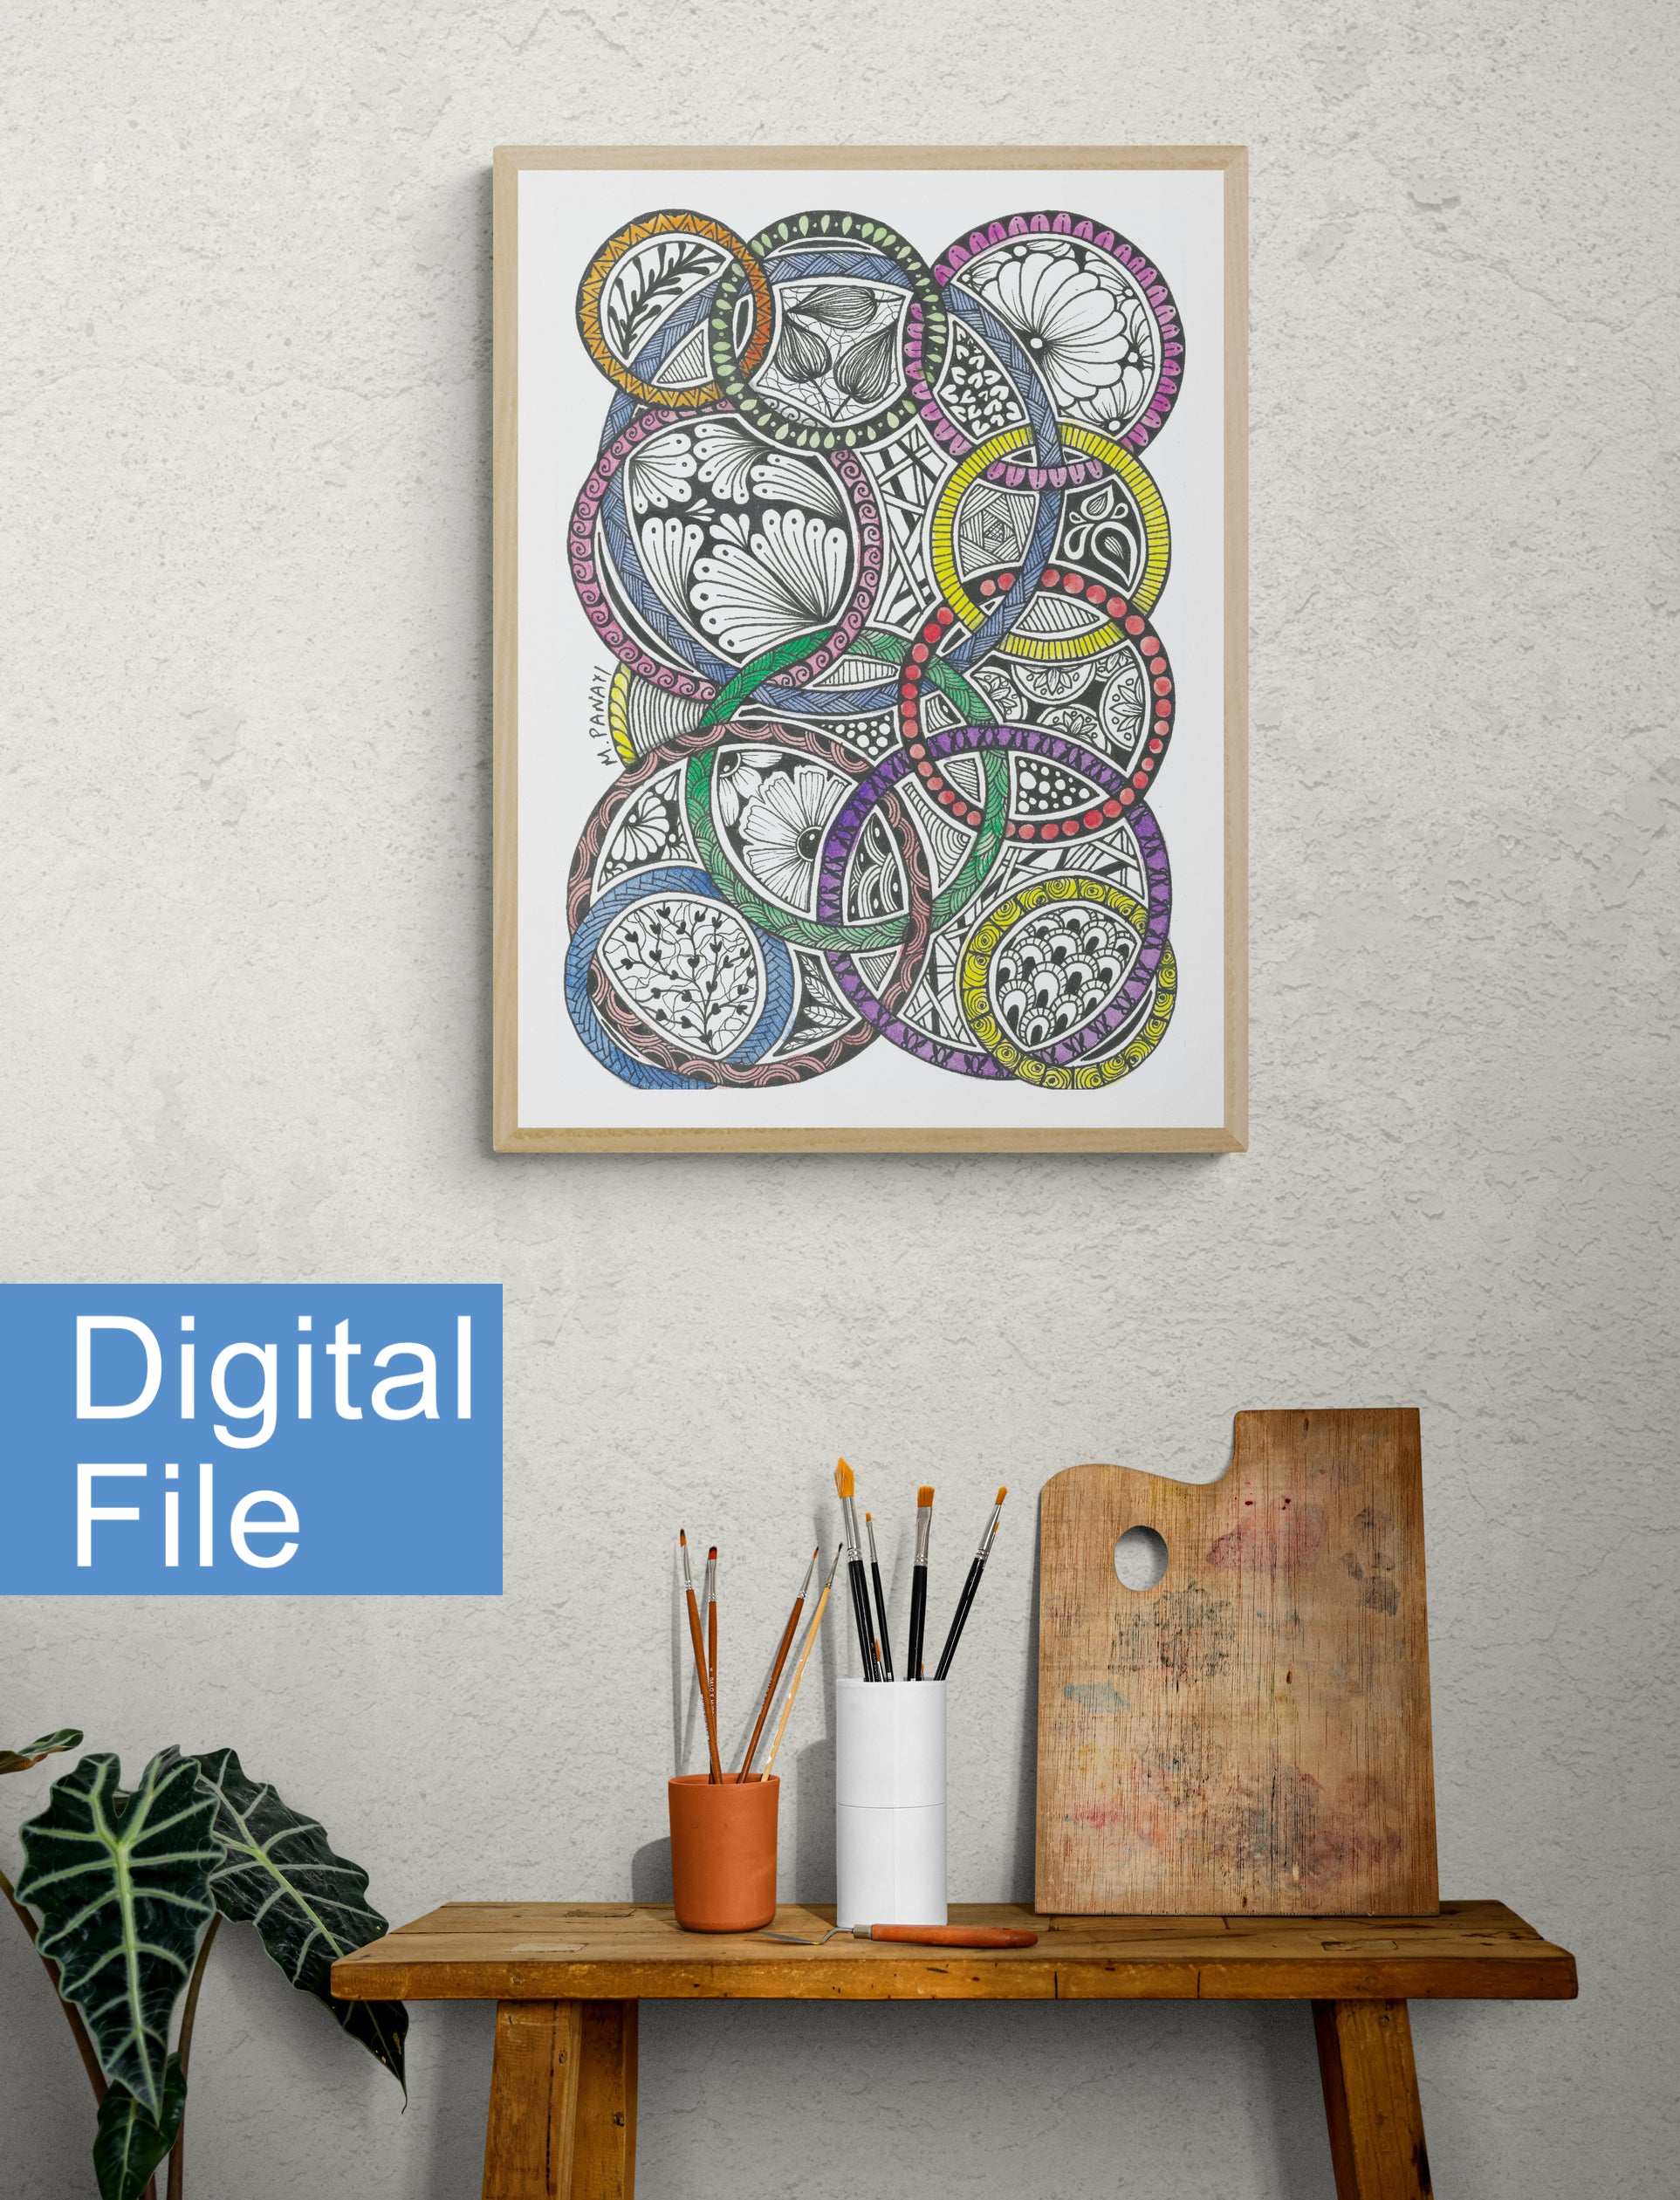 "Circles" Printable Doodle Artwork - Just download, print, and frame!